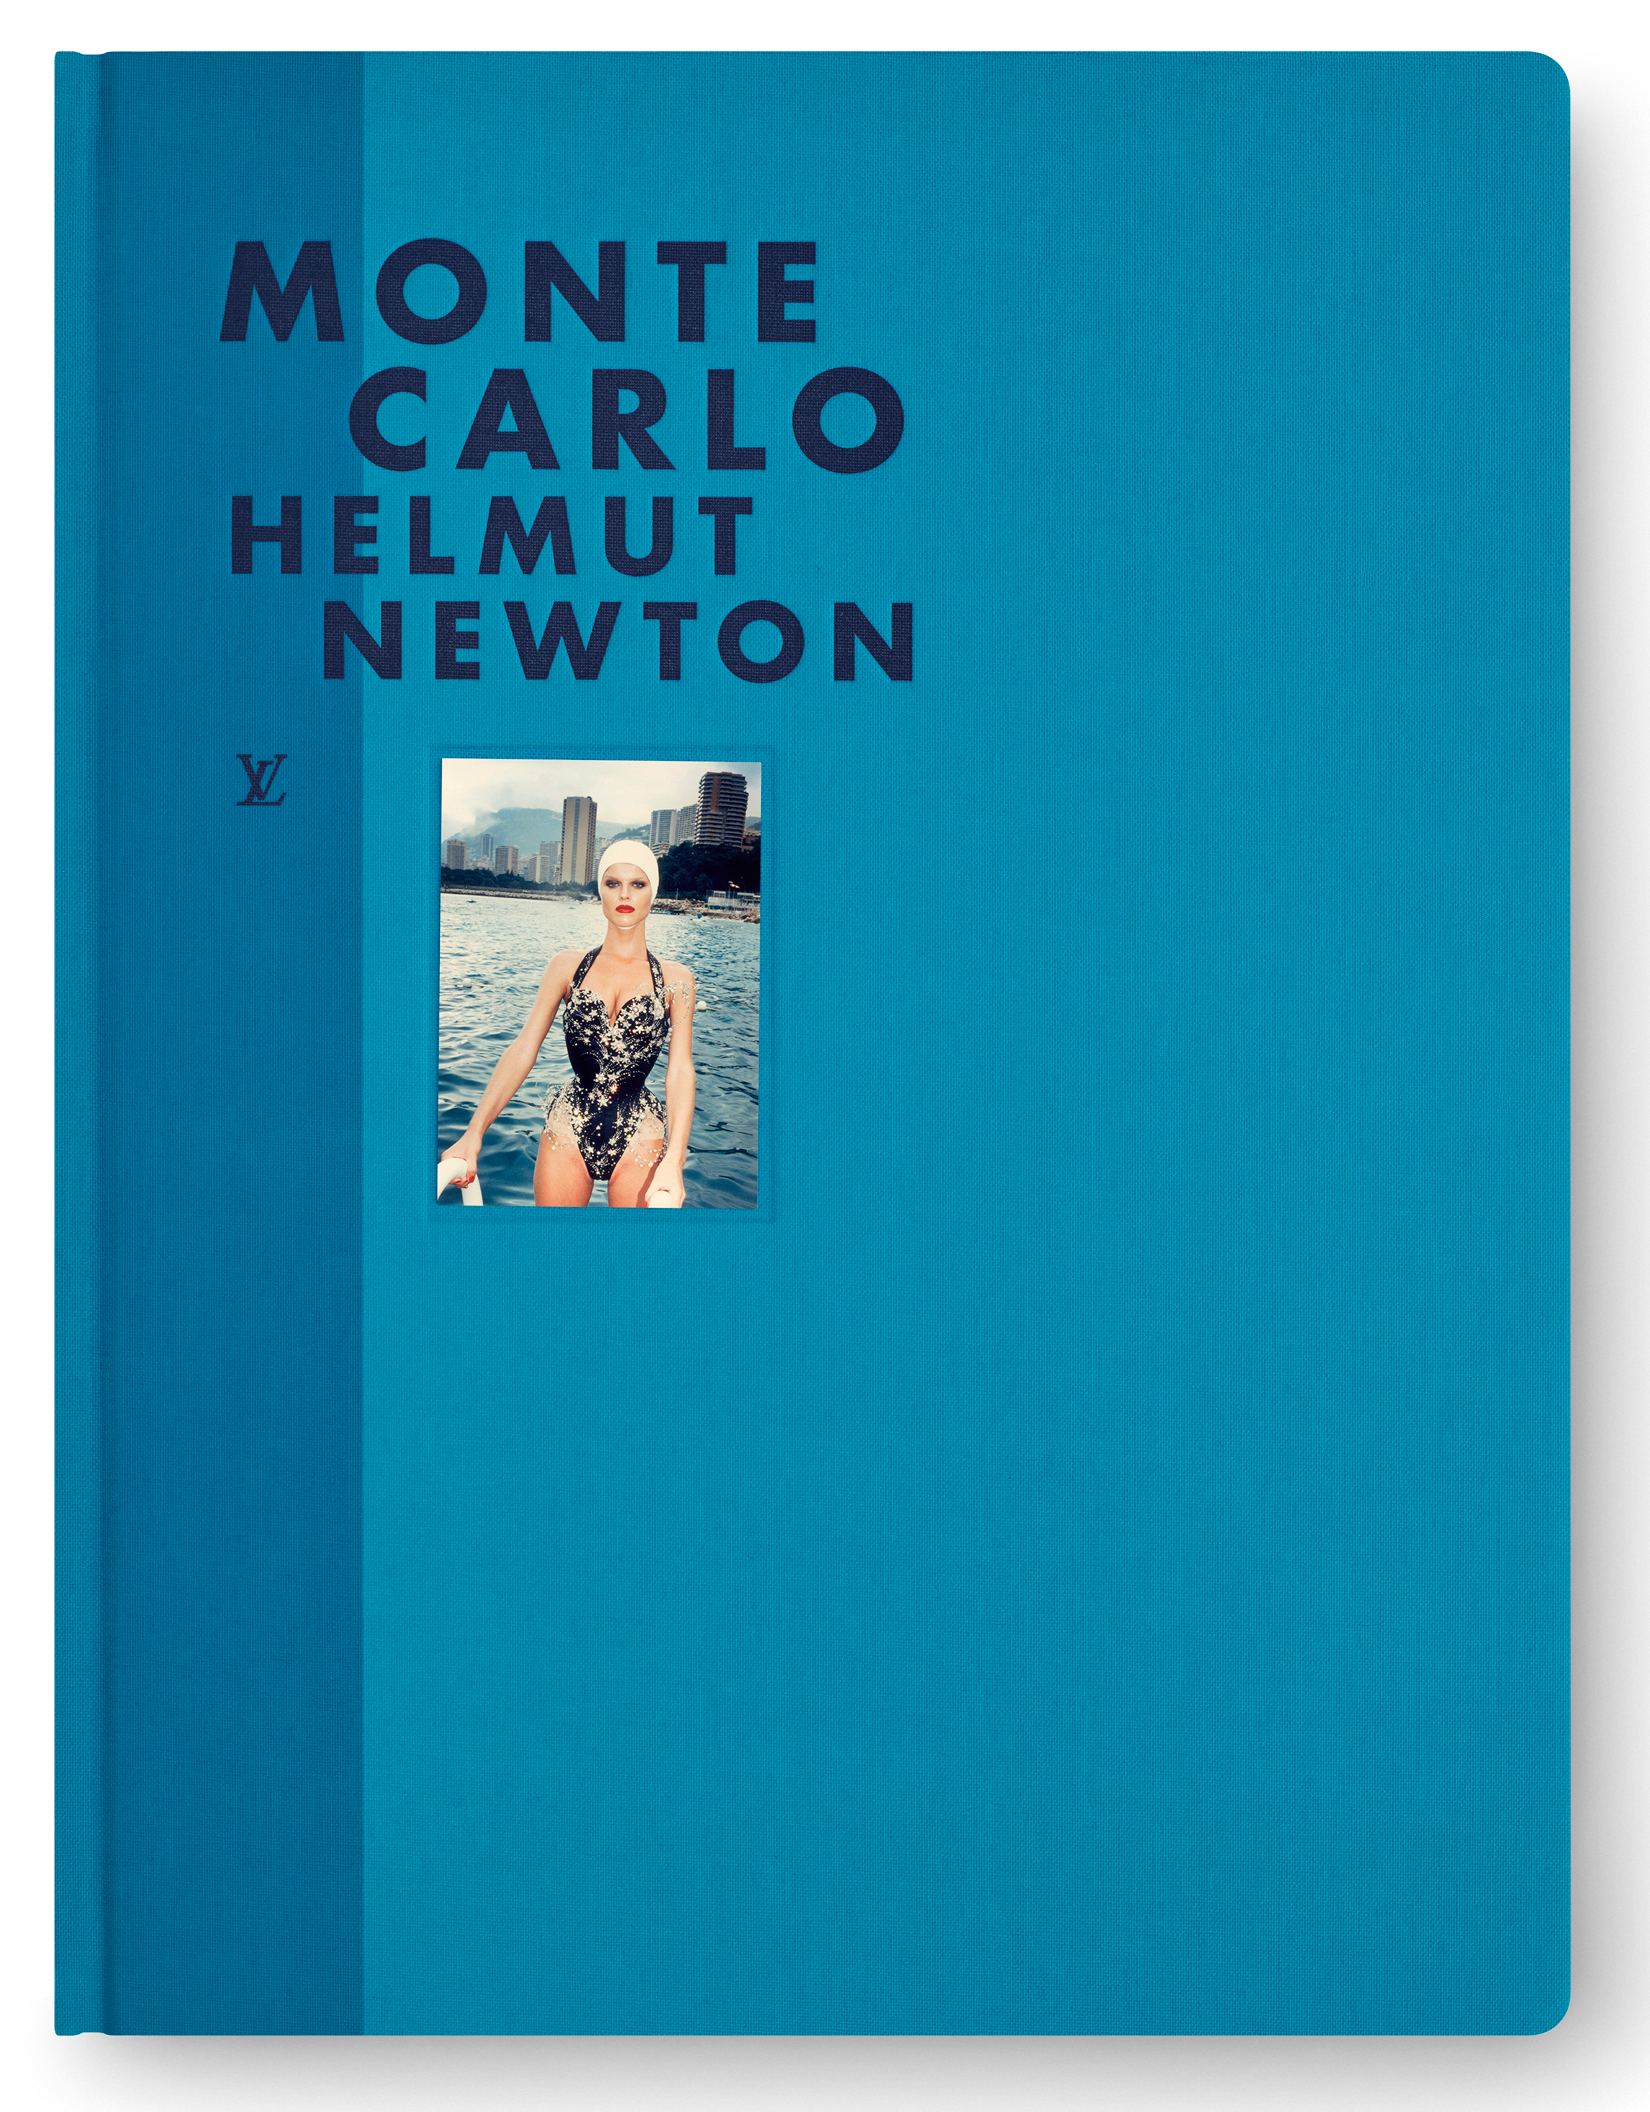 Helmut Newton — worldwide representation — Maconochie Photography